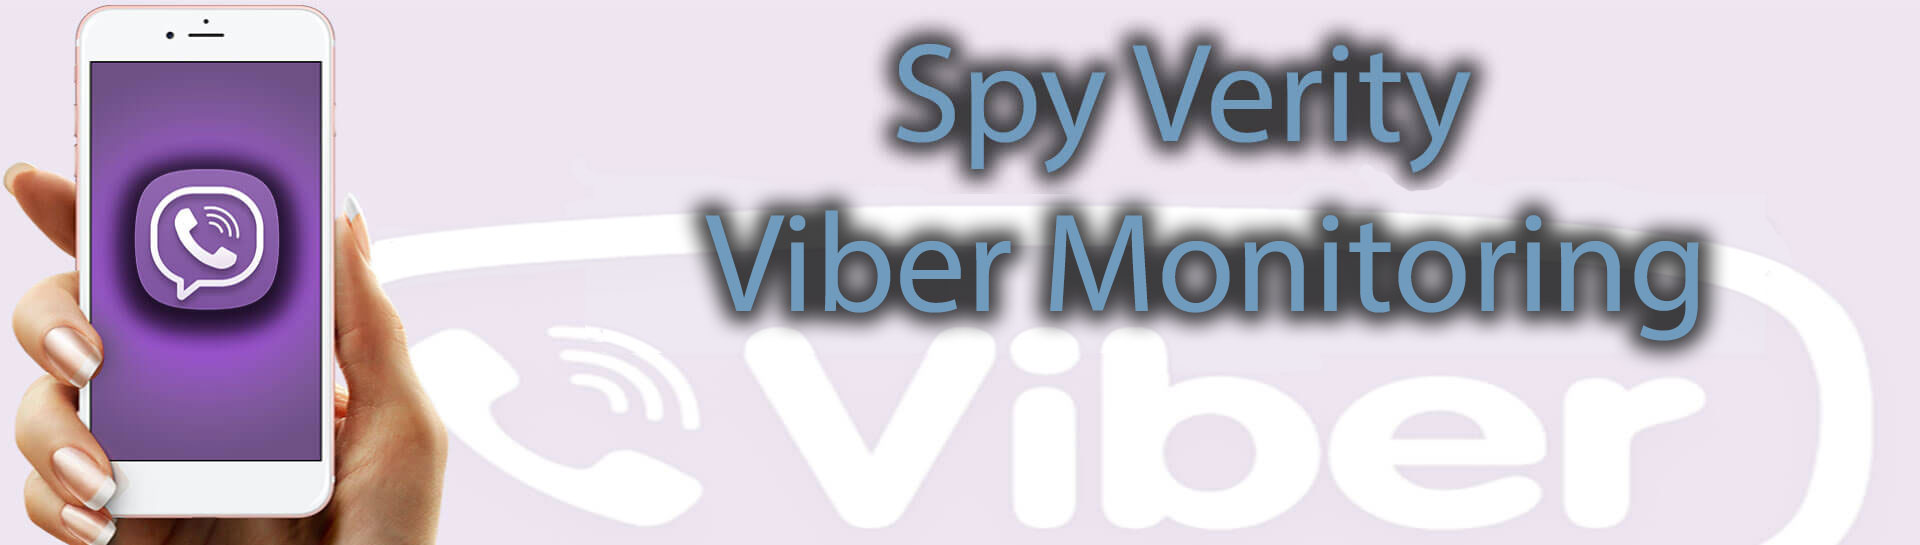 viber spy